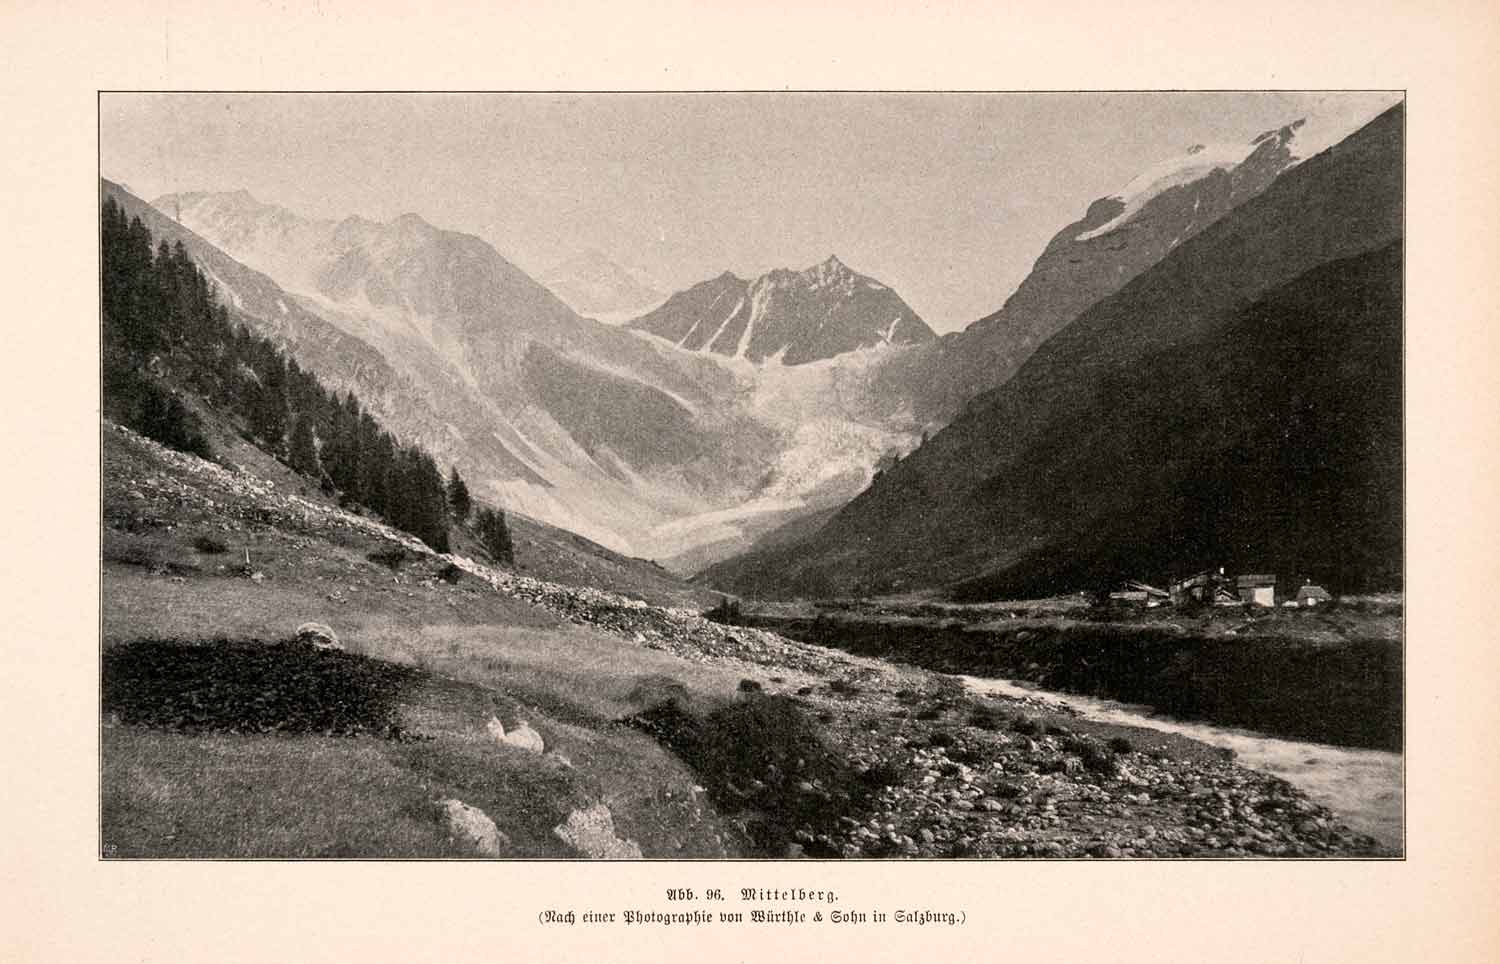 1899 Print Mittelberg Pitztal Tirol Austria Mountains Stream Village XGDA3